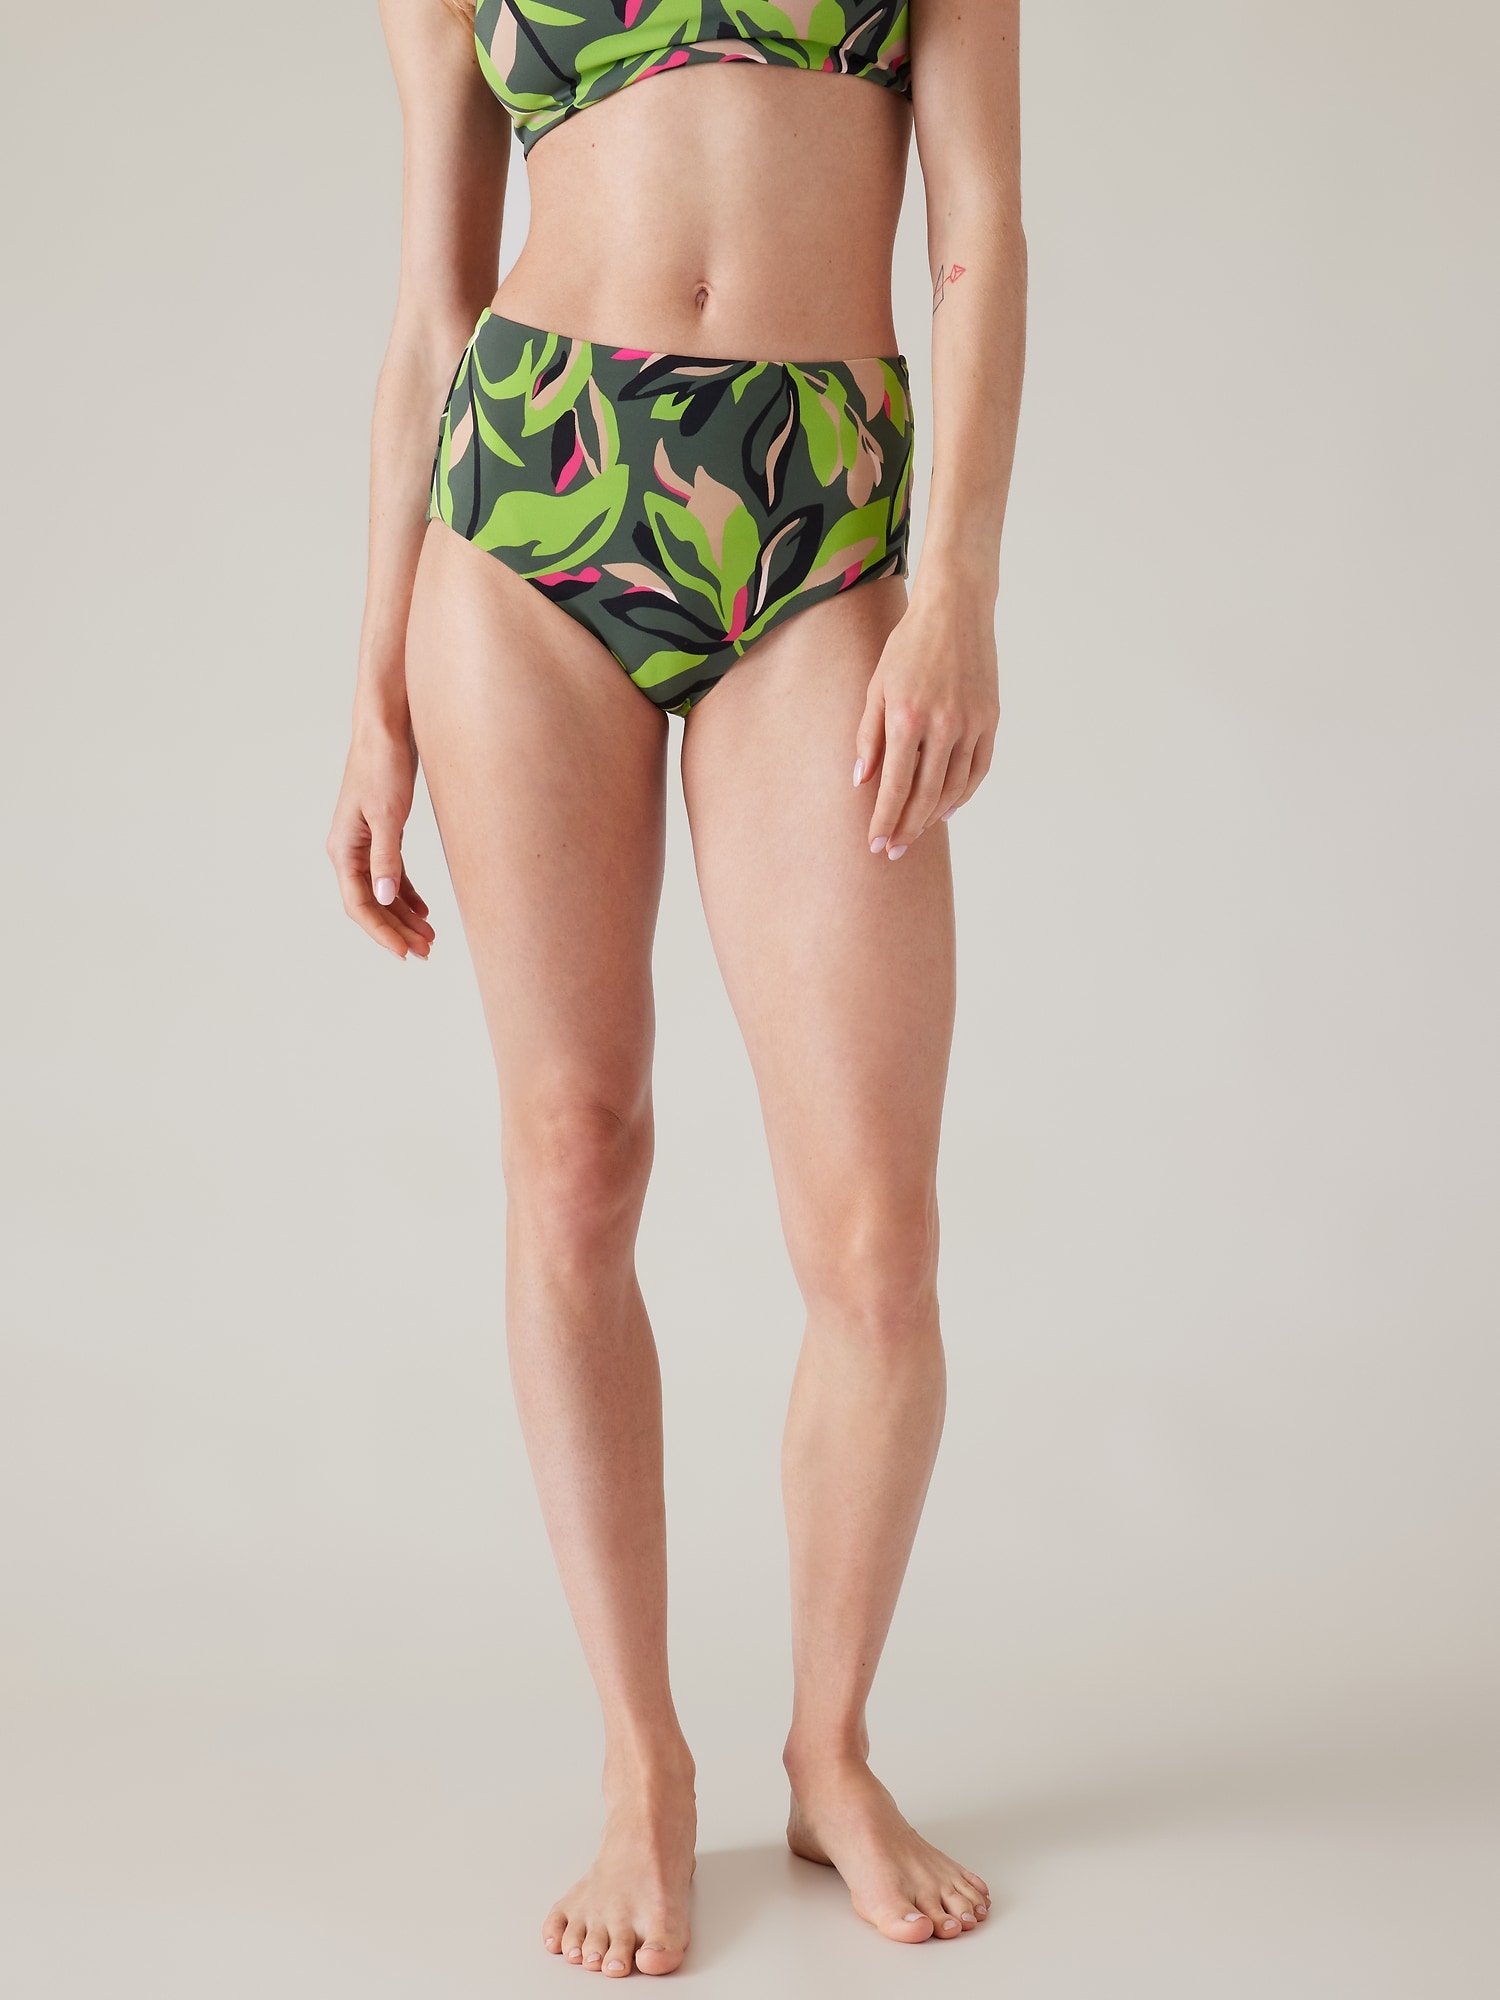 Aayomet Women's Swim Boardshorts Bottoms High Cut Swim Bottom Full Coverage  Swimsuit Bottom Sports Yoga Shorts Skirt (Red, XL) 